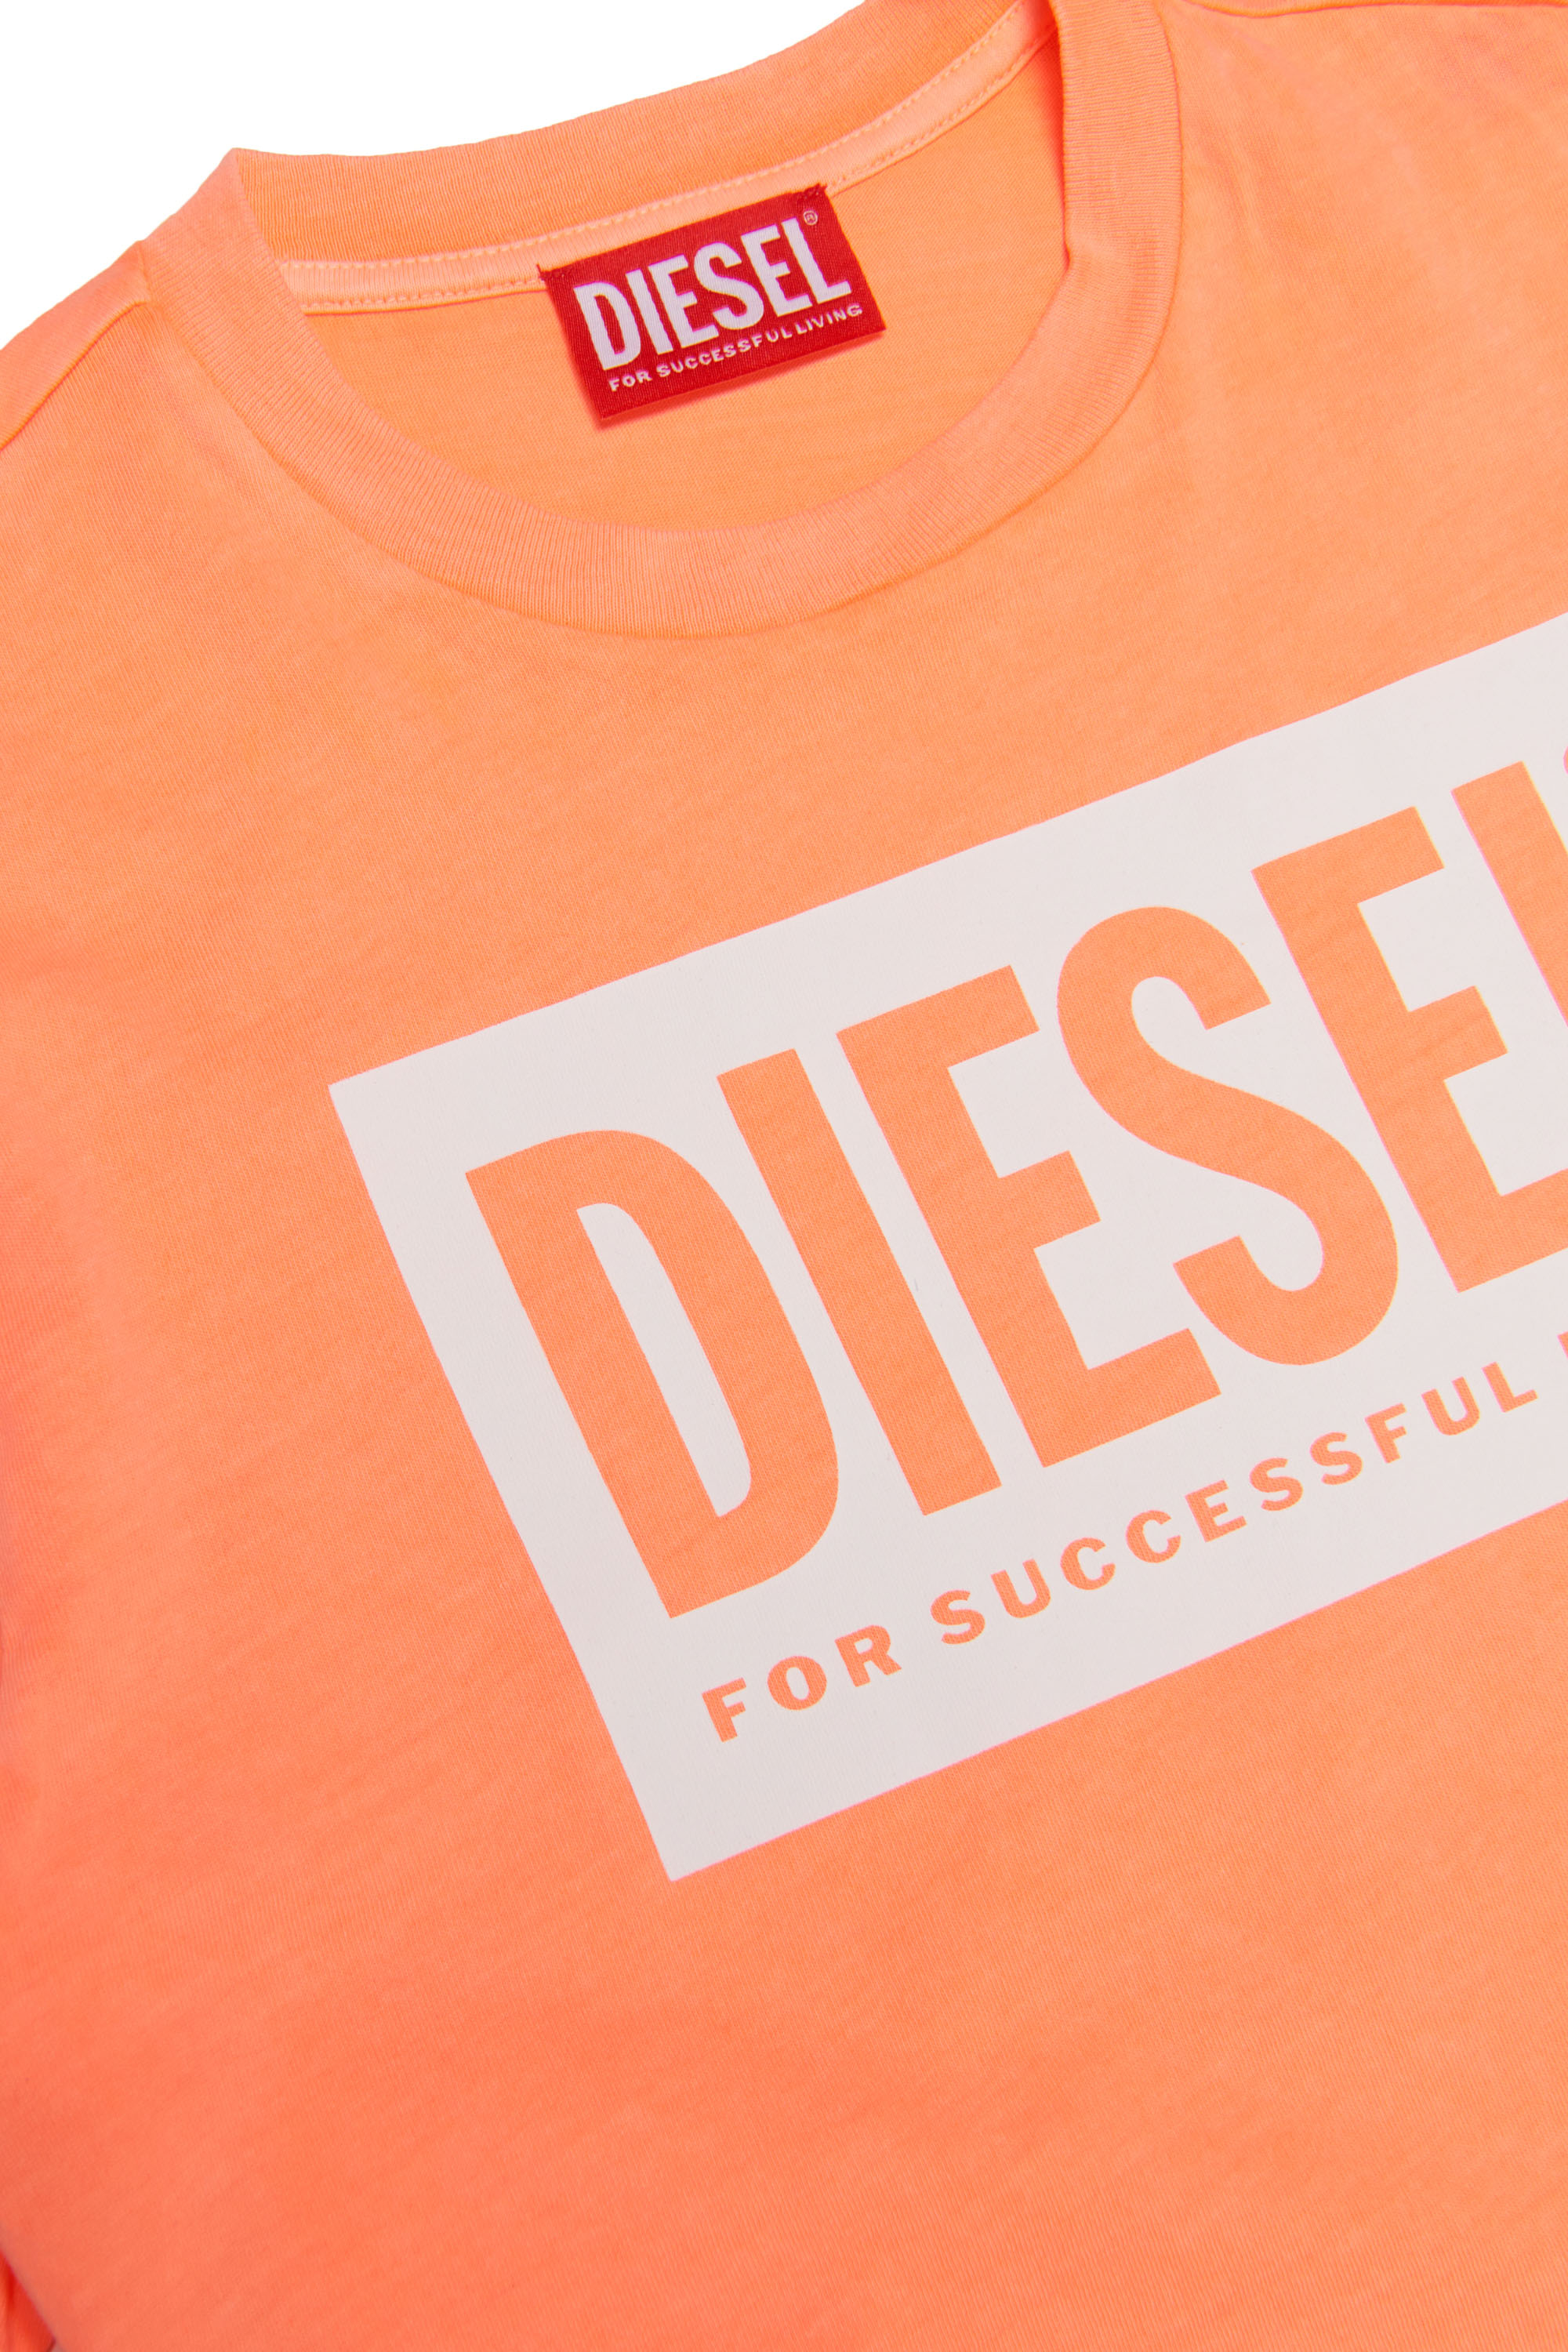 Diesel - TGEO-FF OVER, Arancione - Image 3